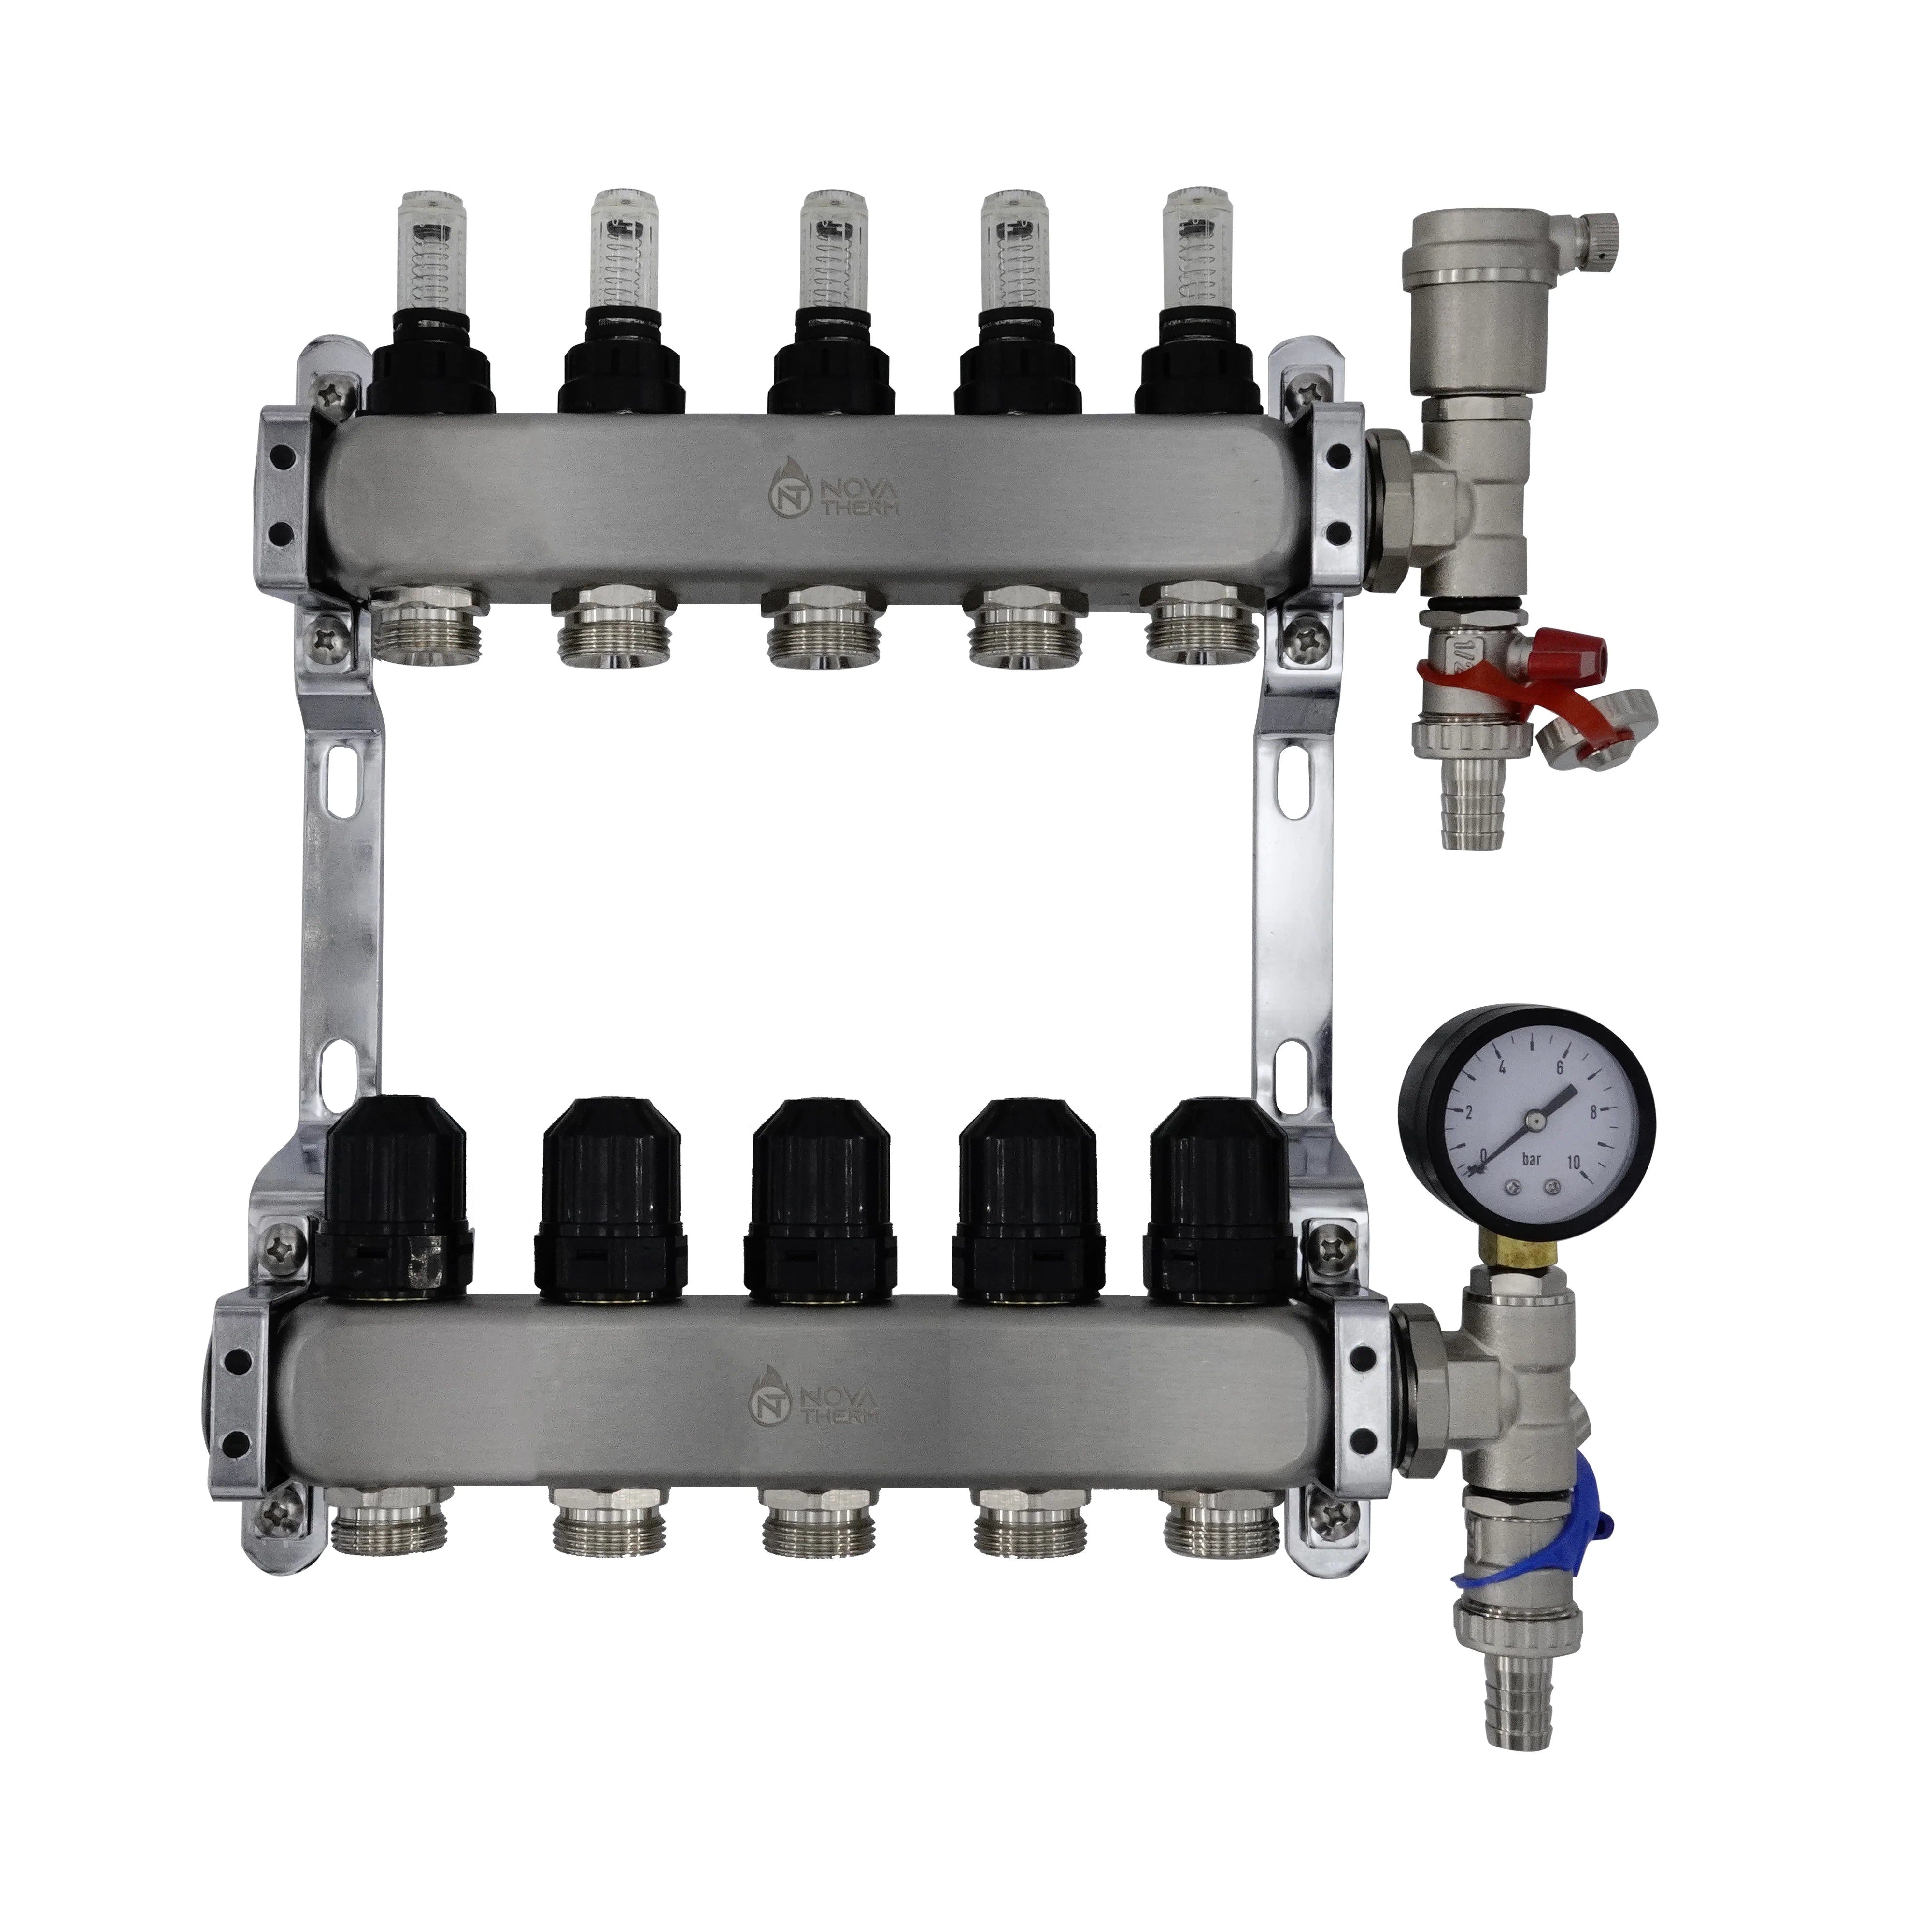 NovaTherm 100sqm Multi-Zone Water Underfloor Heating Kit